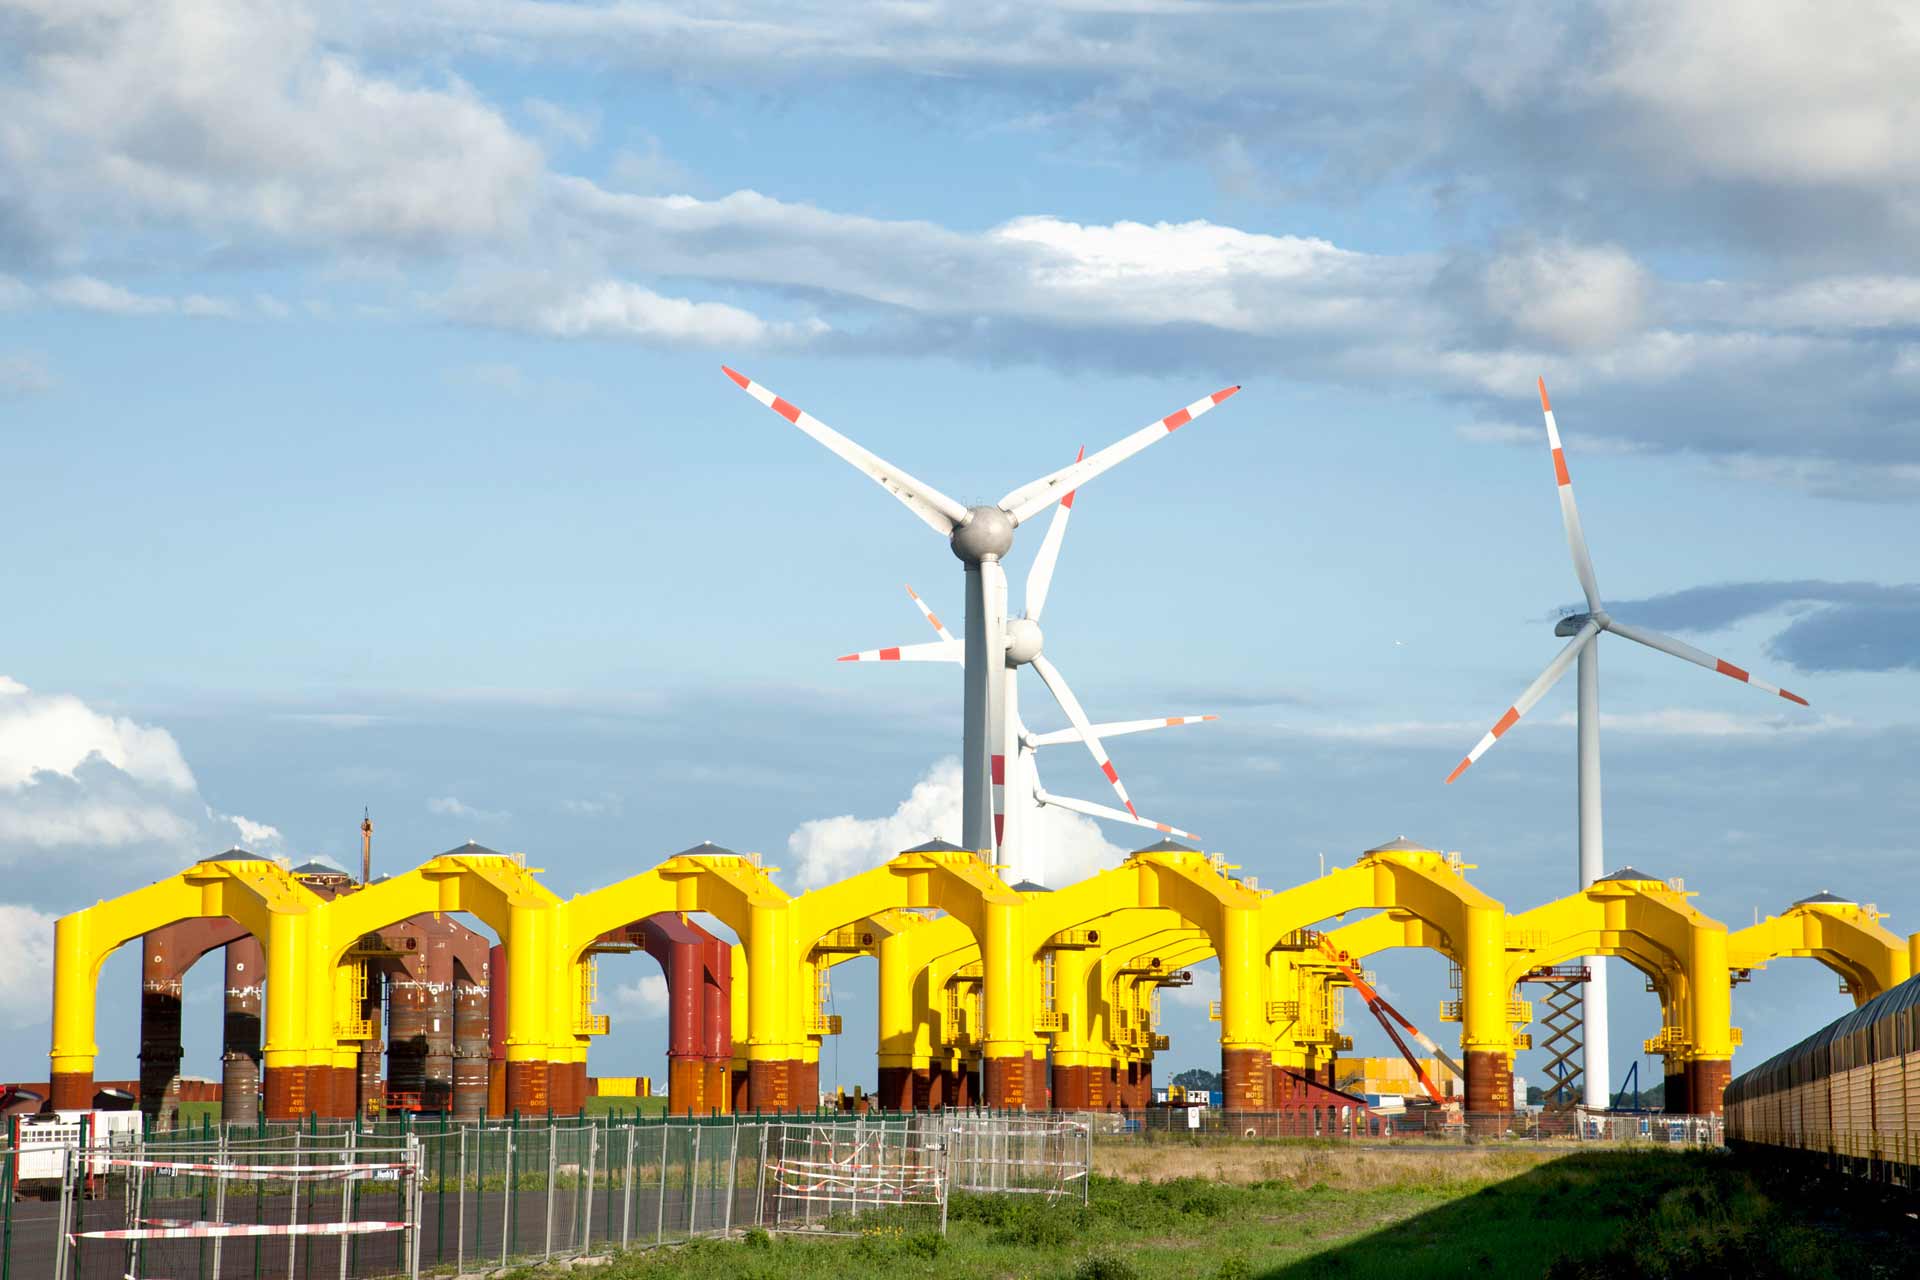 Windpark Groden 1 near Cuxhaven